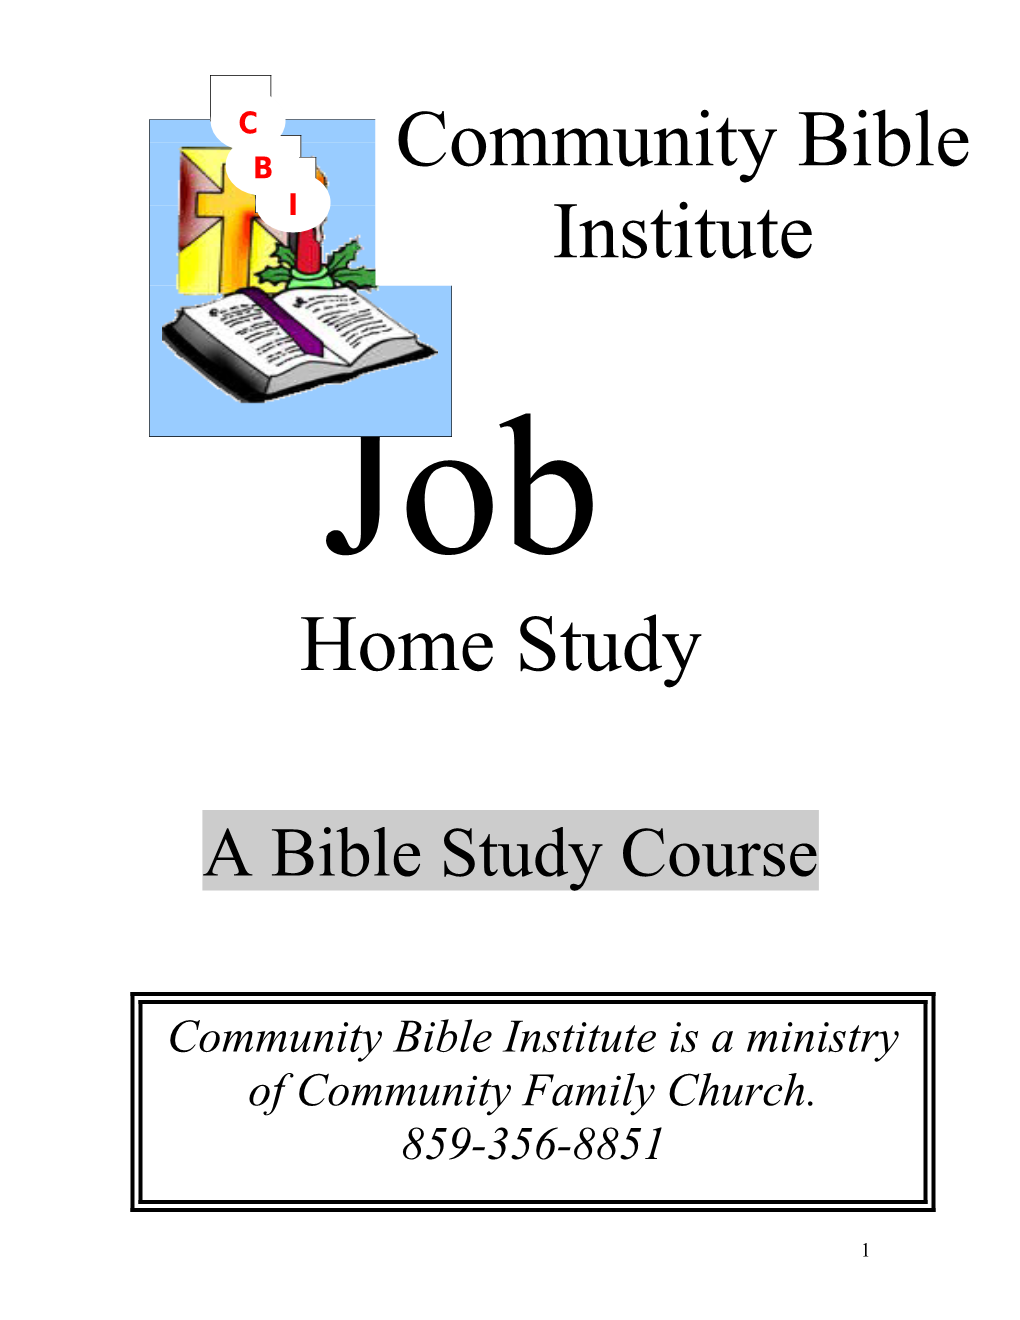 A Bible Study Course